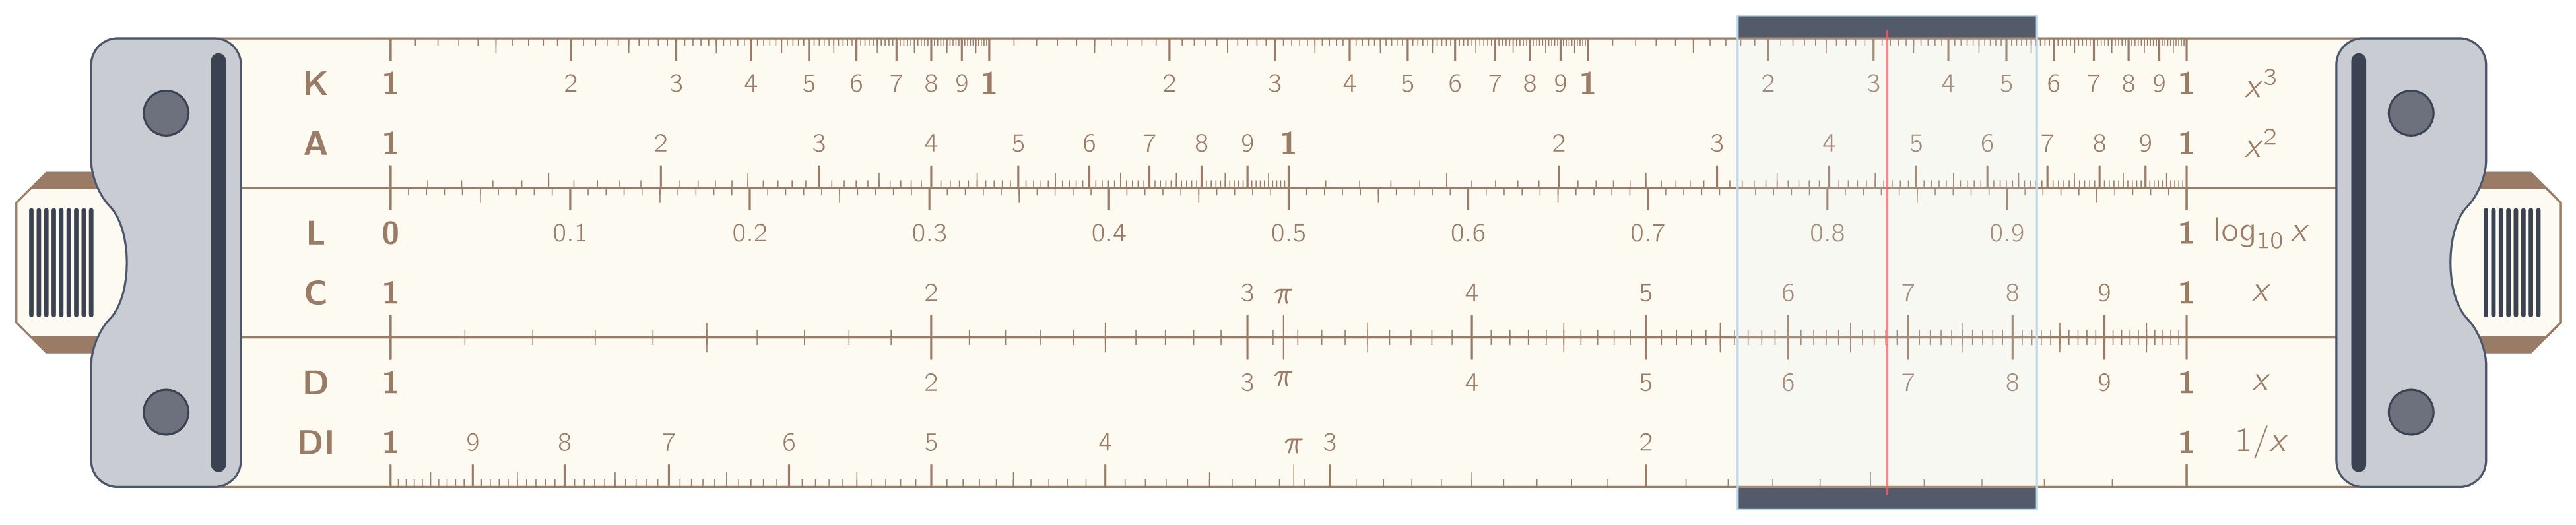 TikZ 绘制一个滑动计算尺